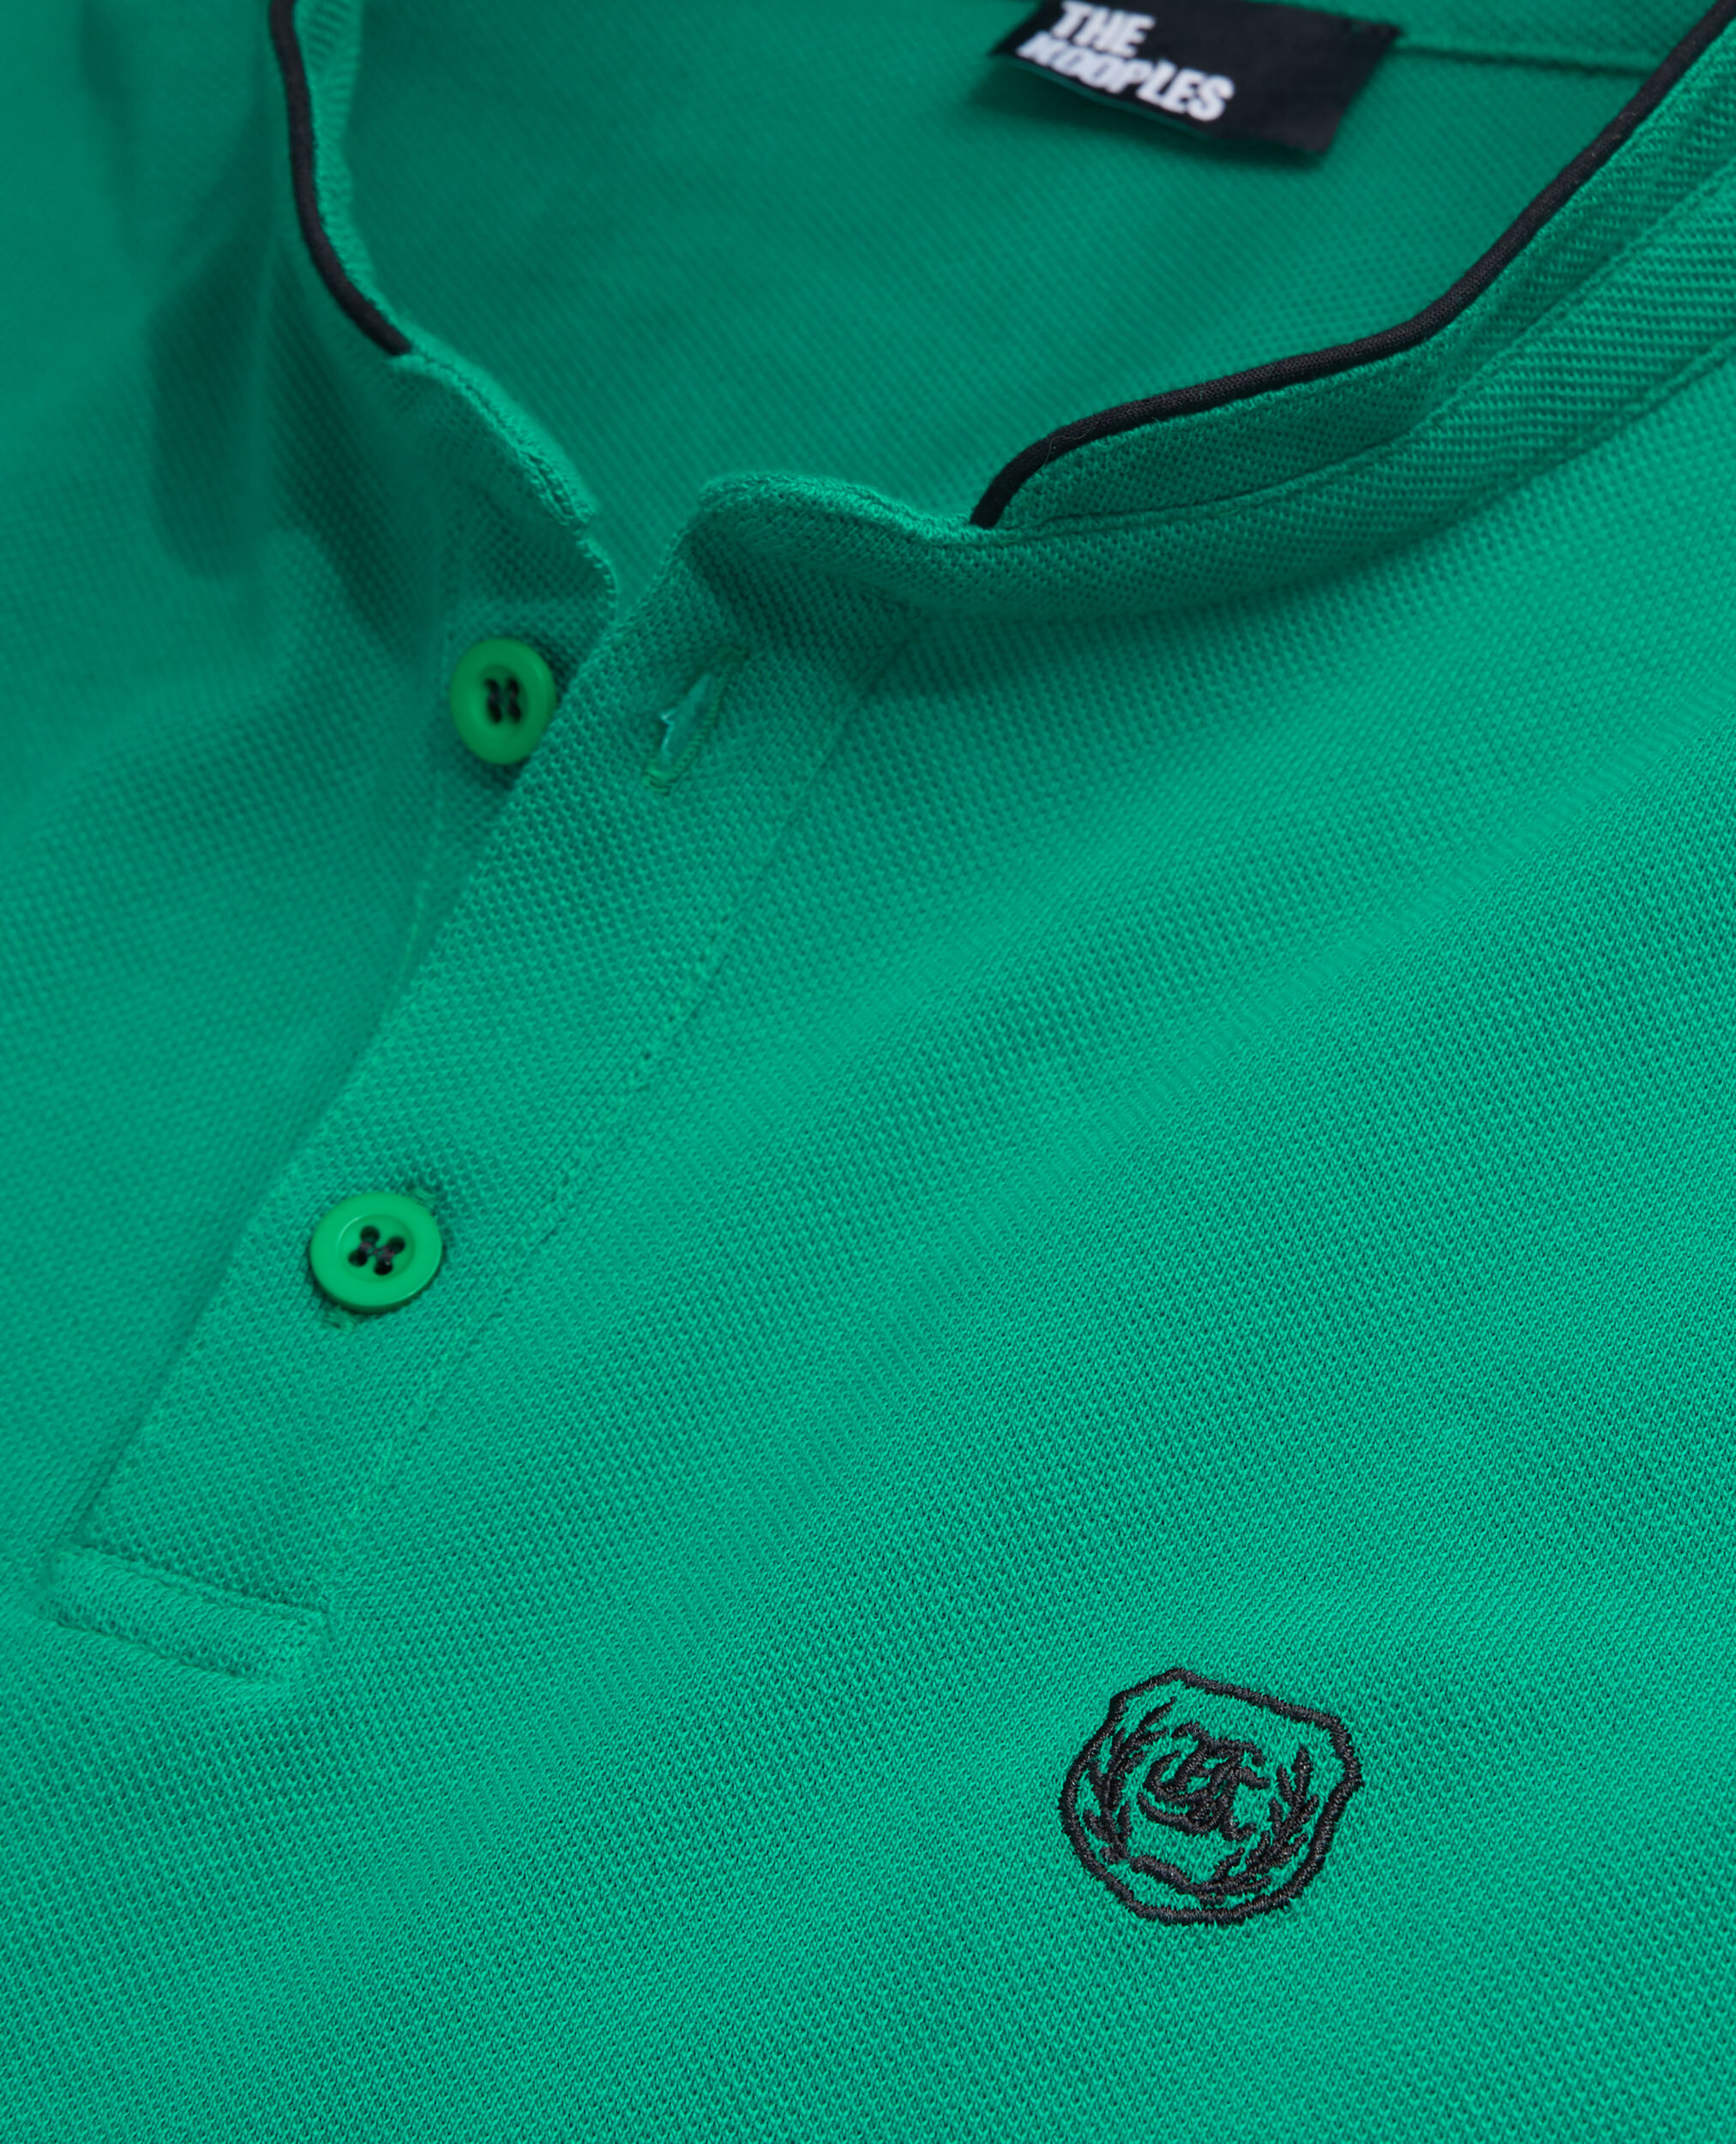 Grünes Poloshirt mit Offizierskragen, APPLE, hi-res image number null